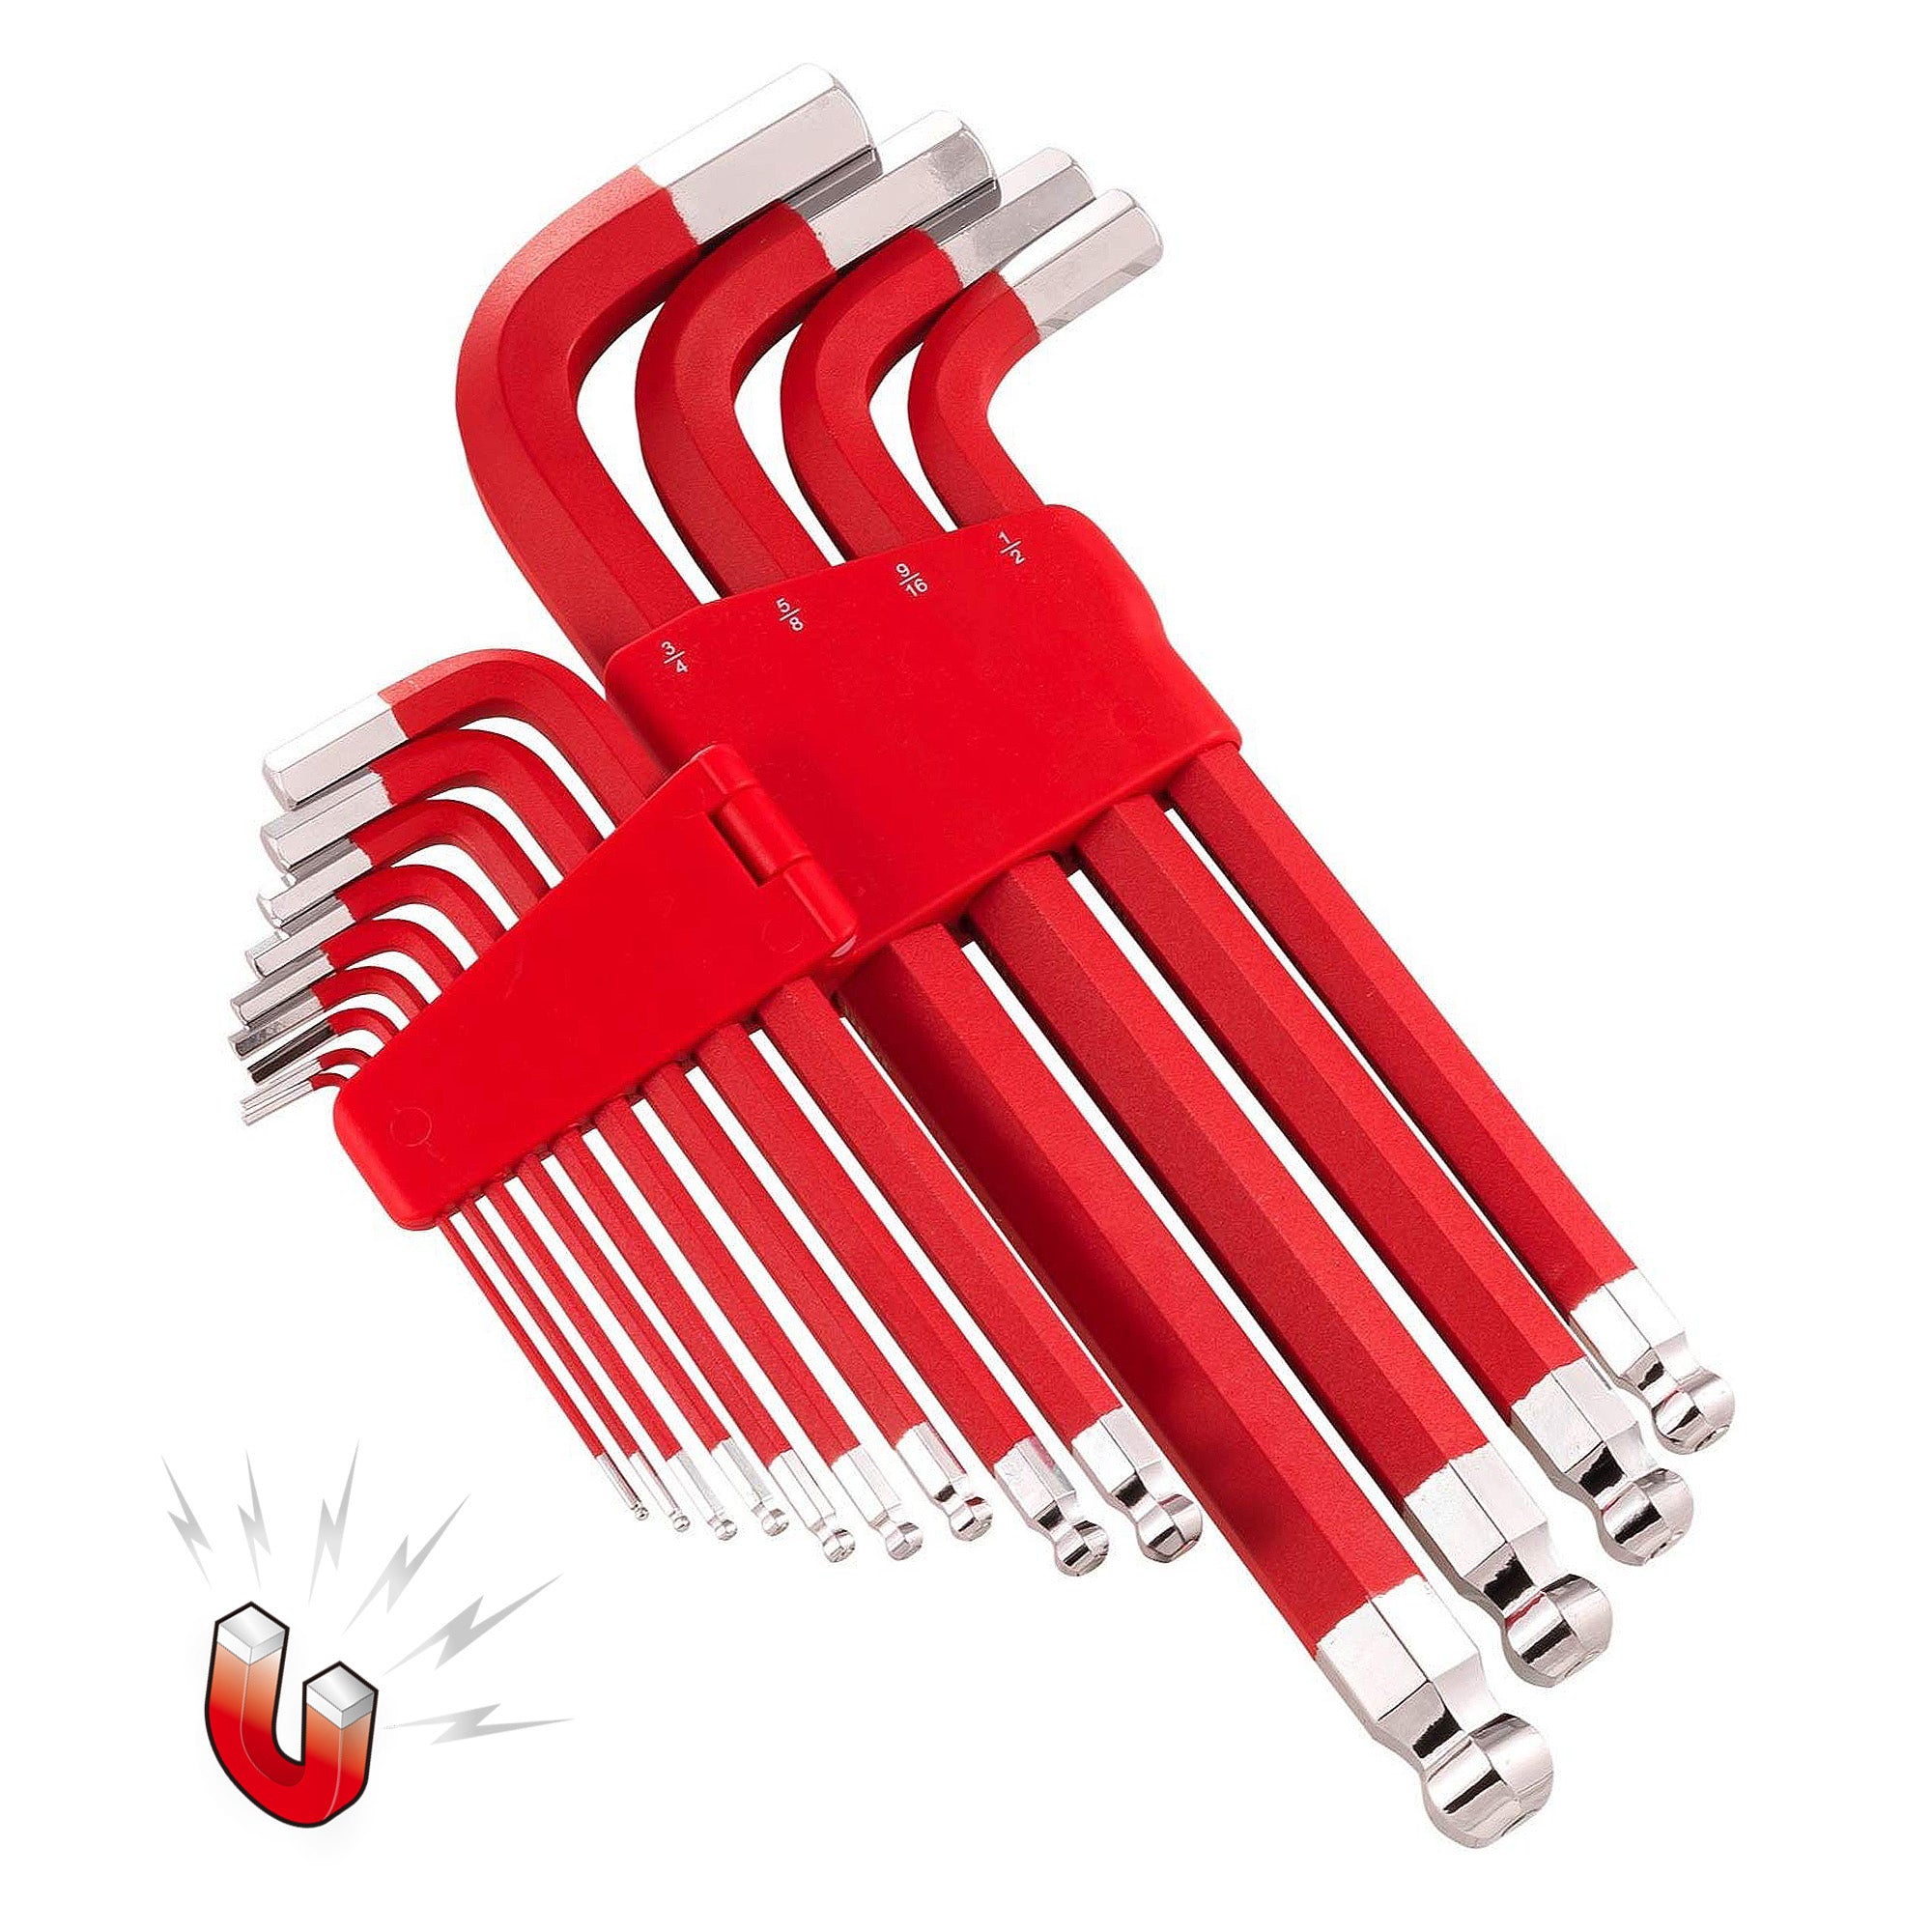 7 PCS Hex Key Wrench Set, Metric, Grip Tight Tools